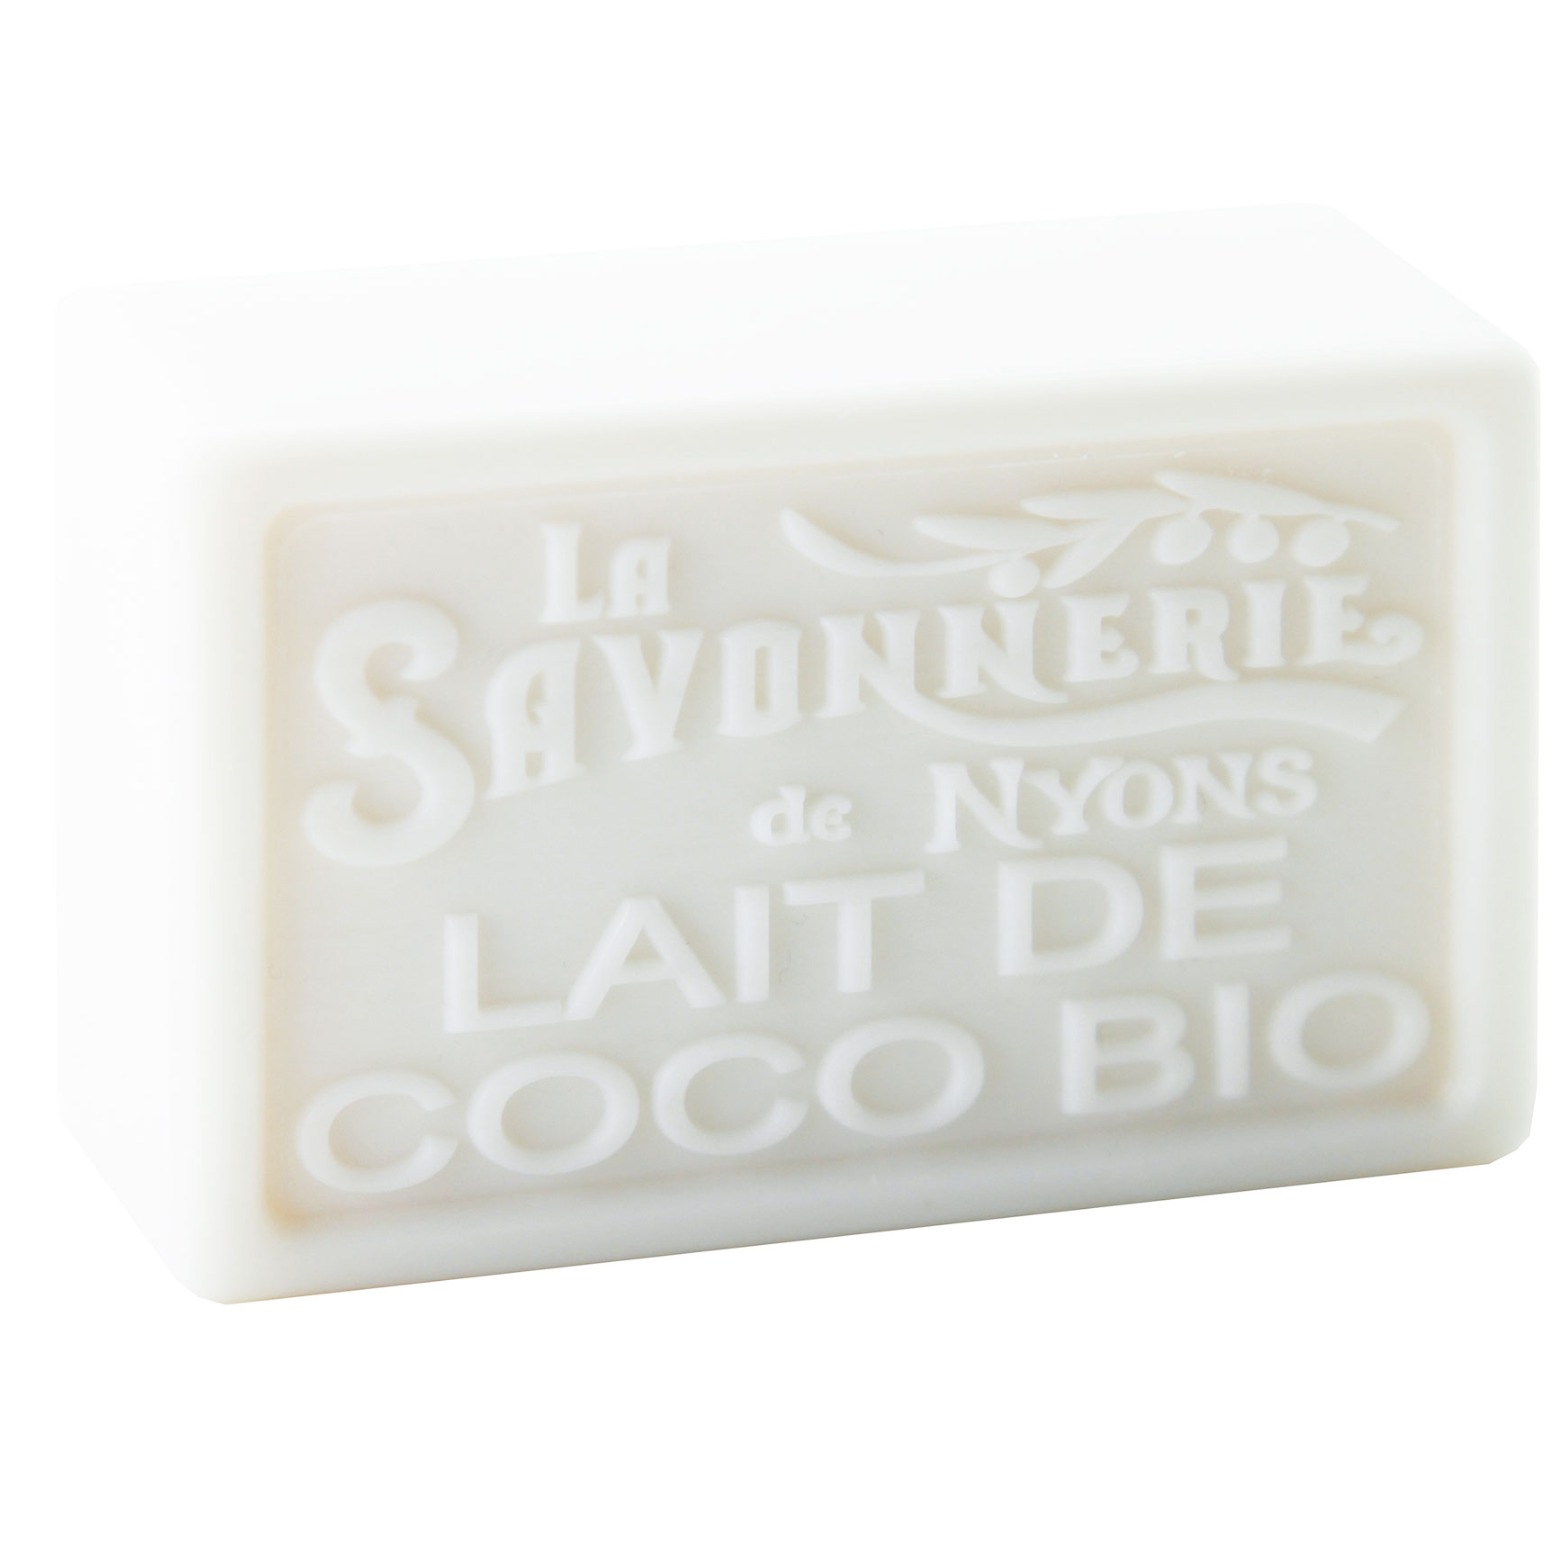 Organic Coconut milk Soap, 3.5oz